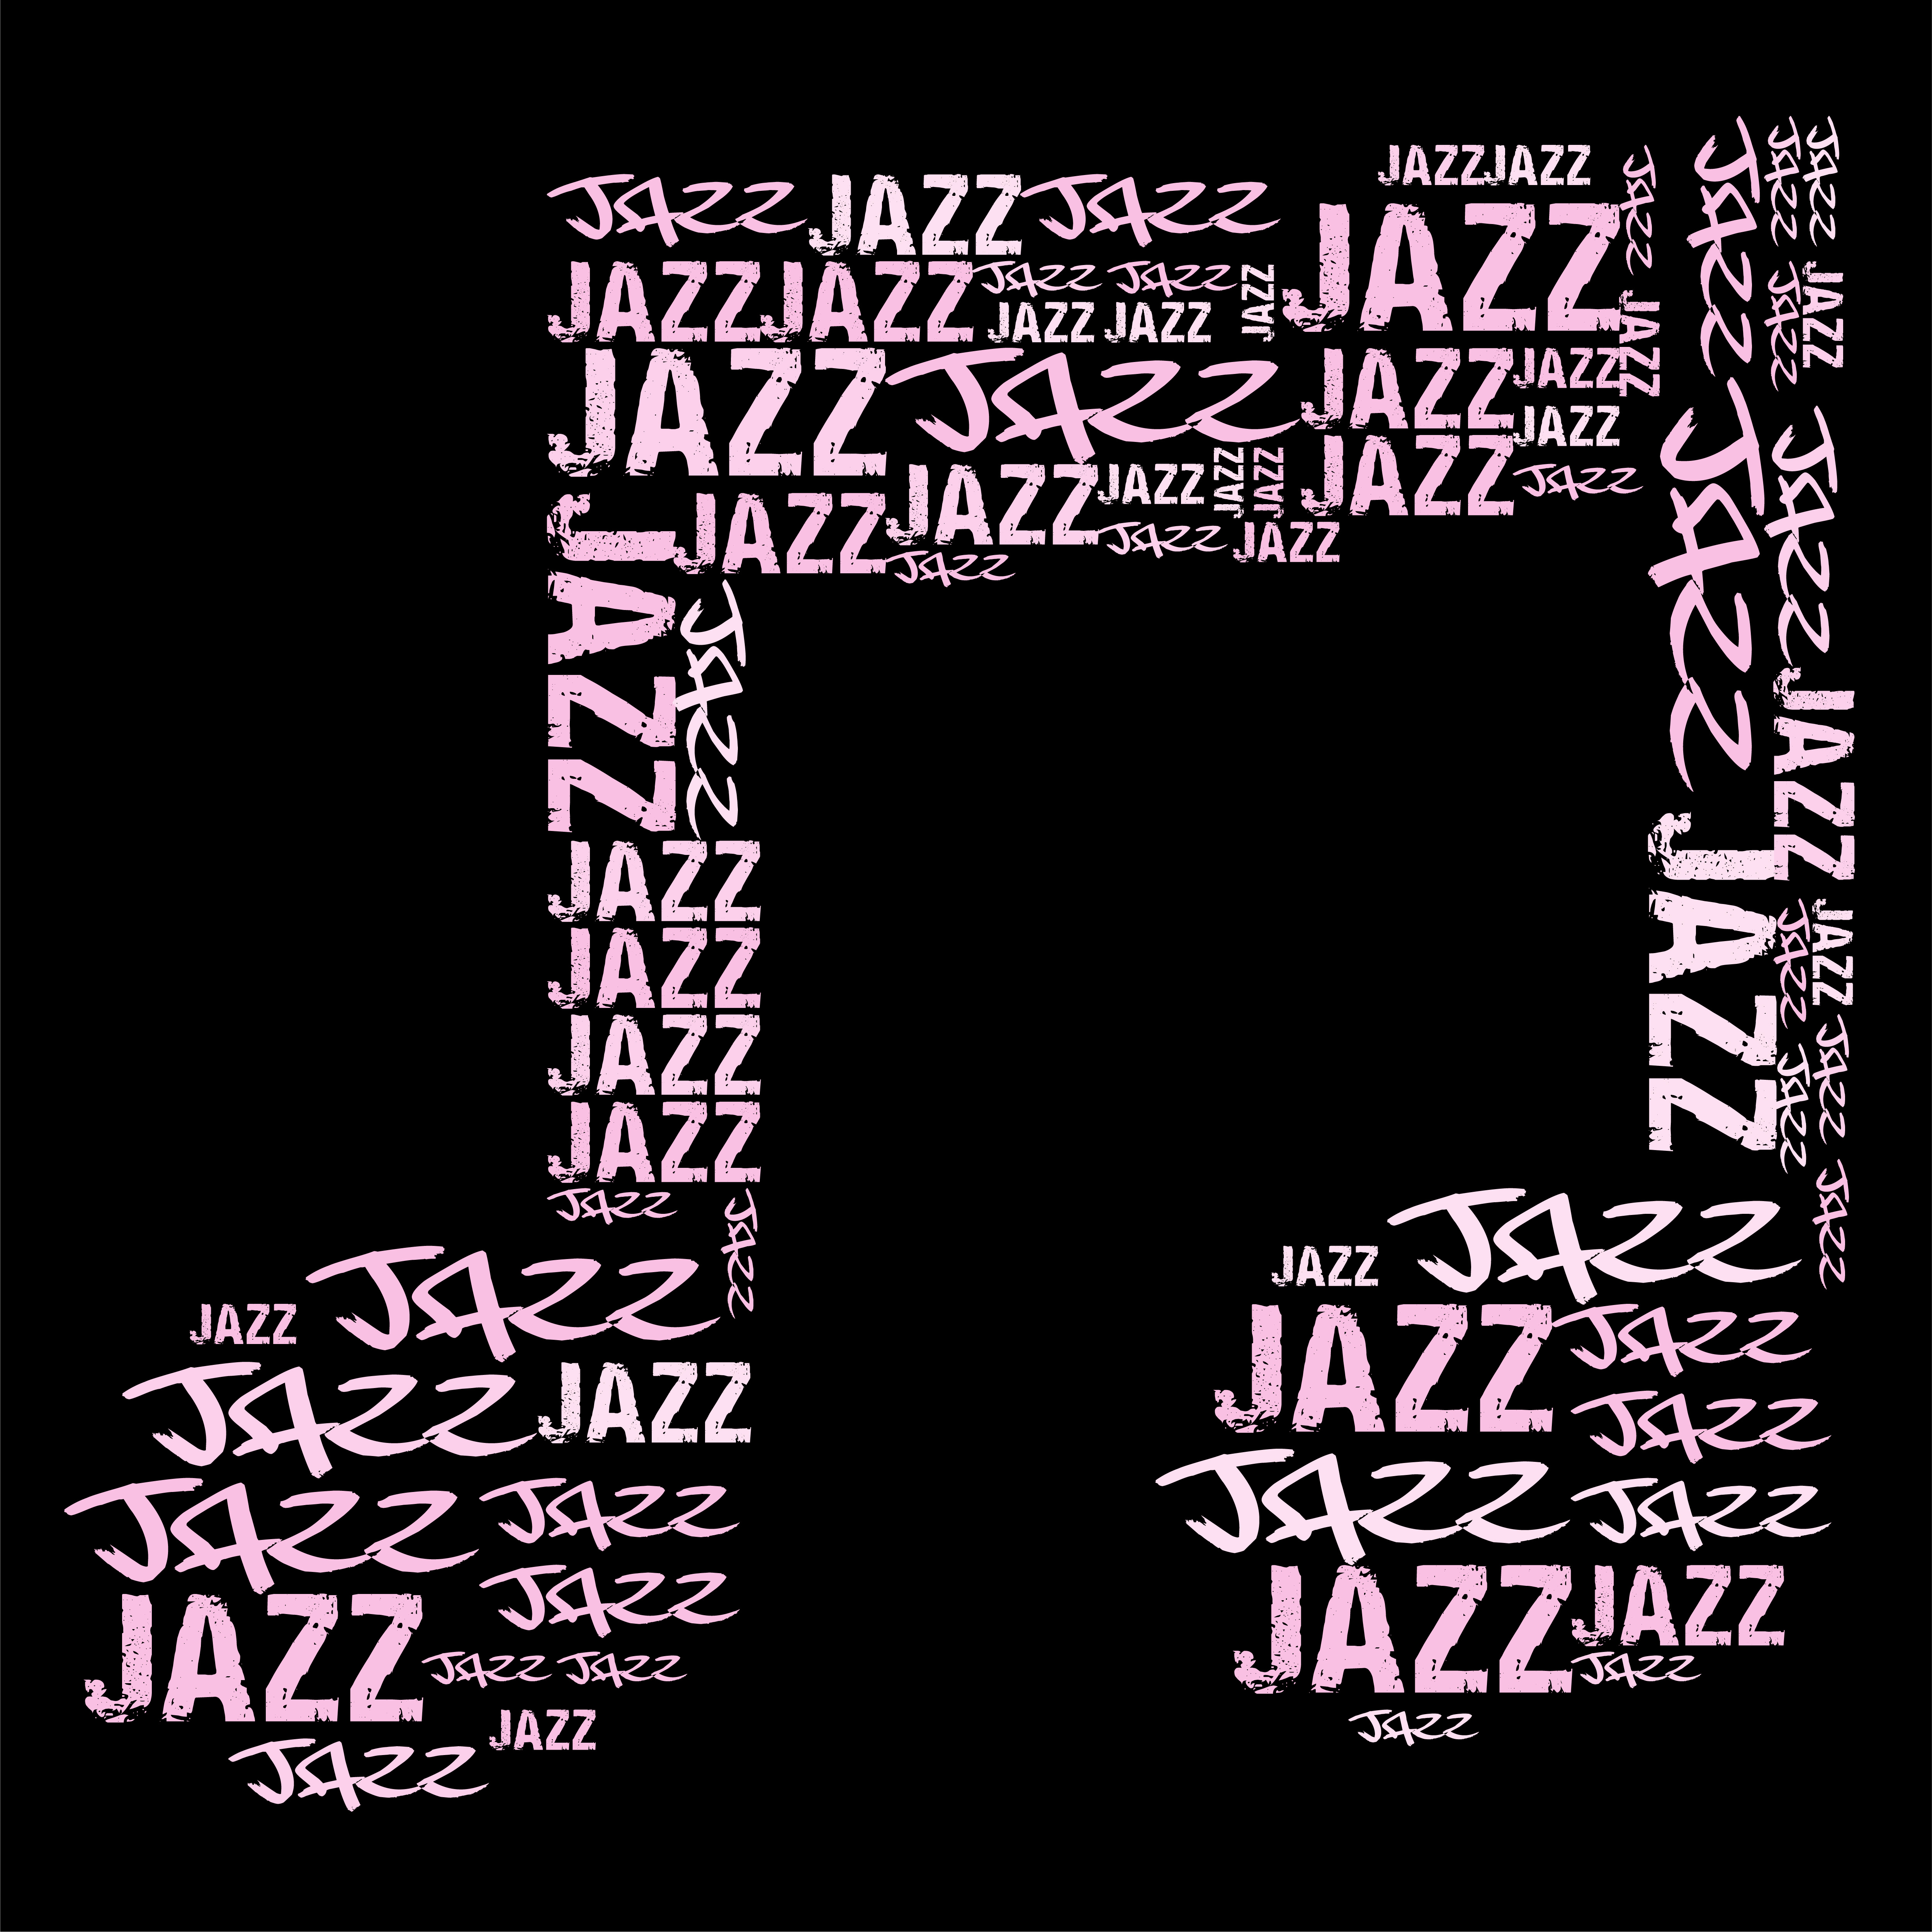 Jazz Music Word Cloud Vector illustration 640089 - Download Free Vectors, Clipart Graphics ...